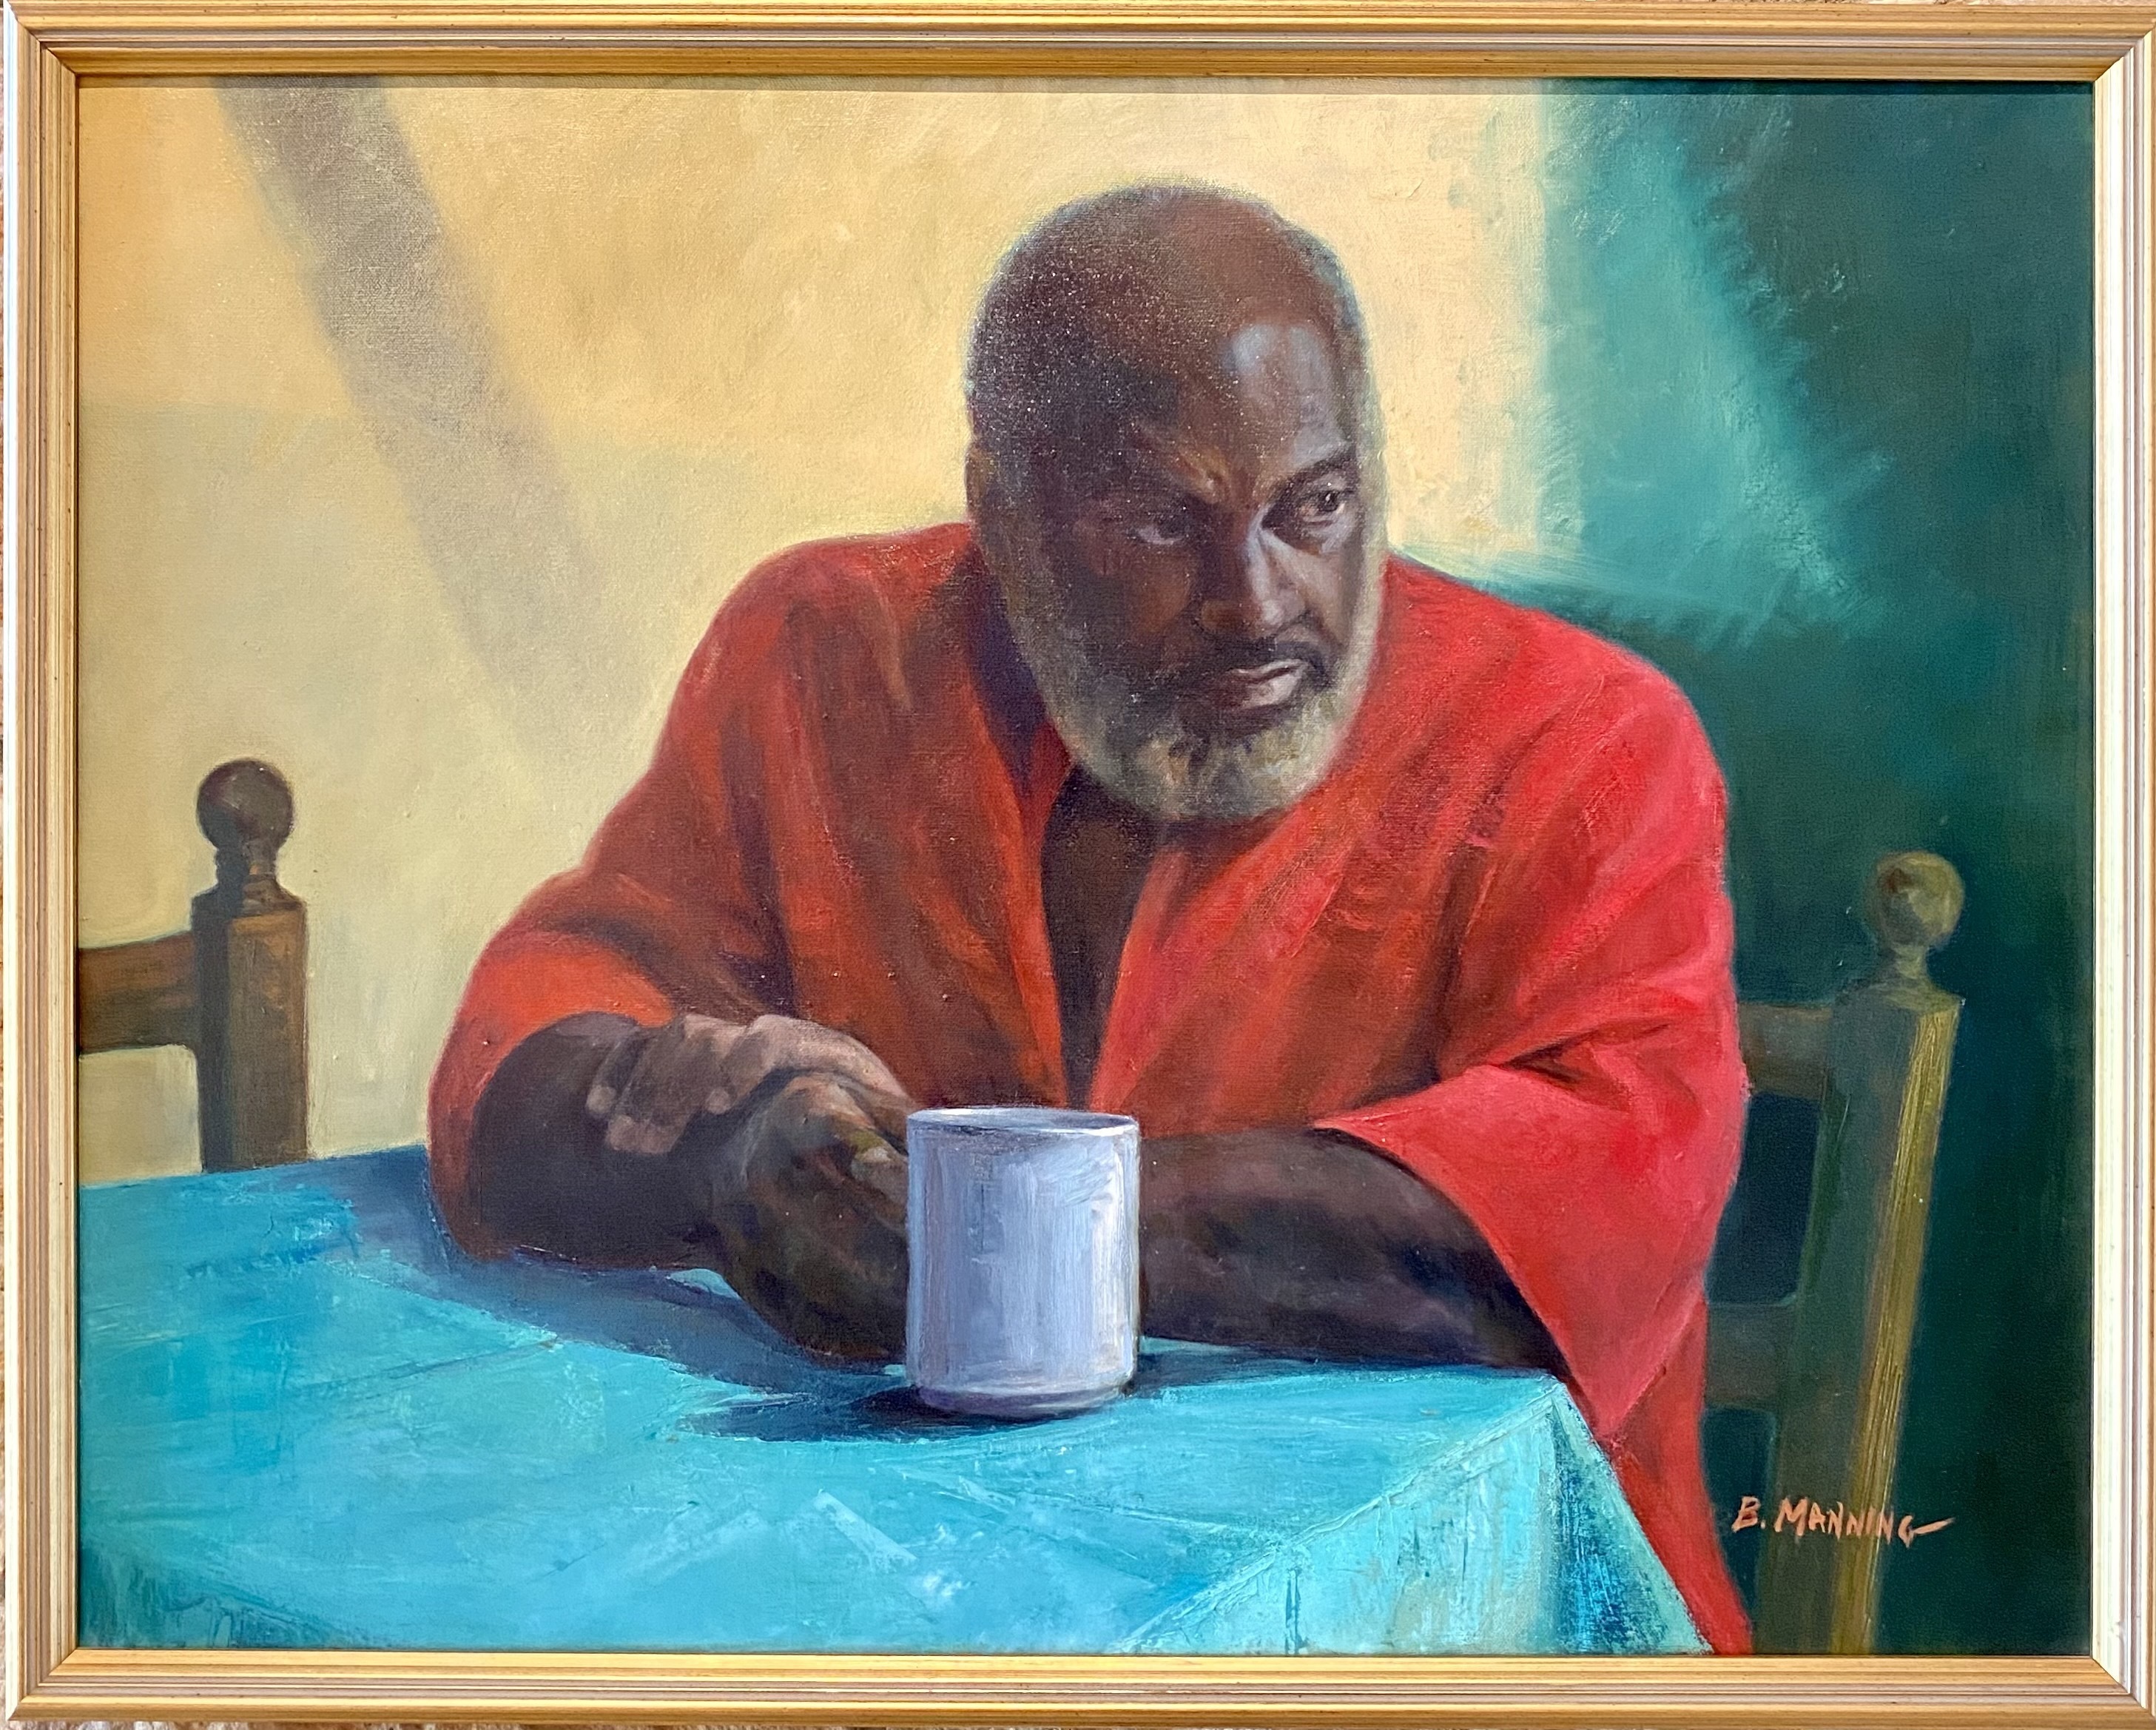 Brenda Manning, <i> Dave (Coffee Break)</i>, 1991, Oil on canvas, Gift of the artist